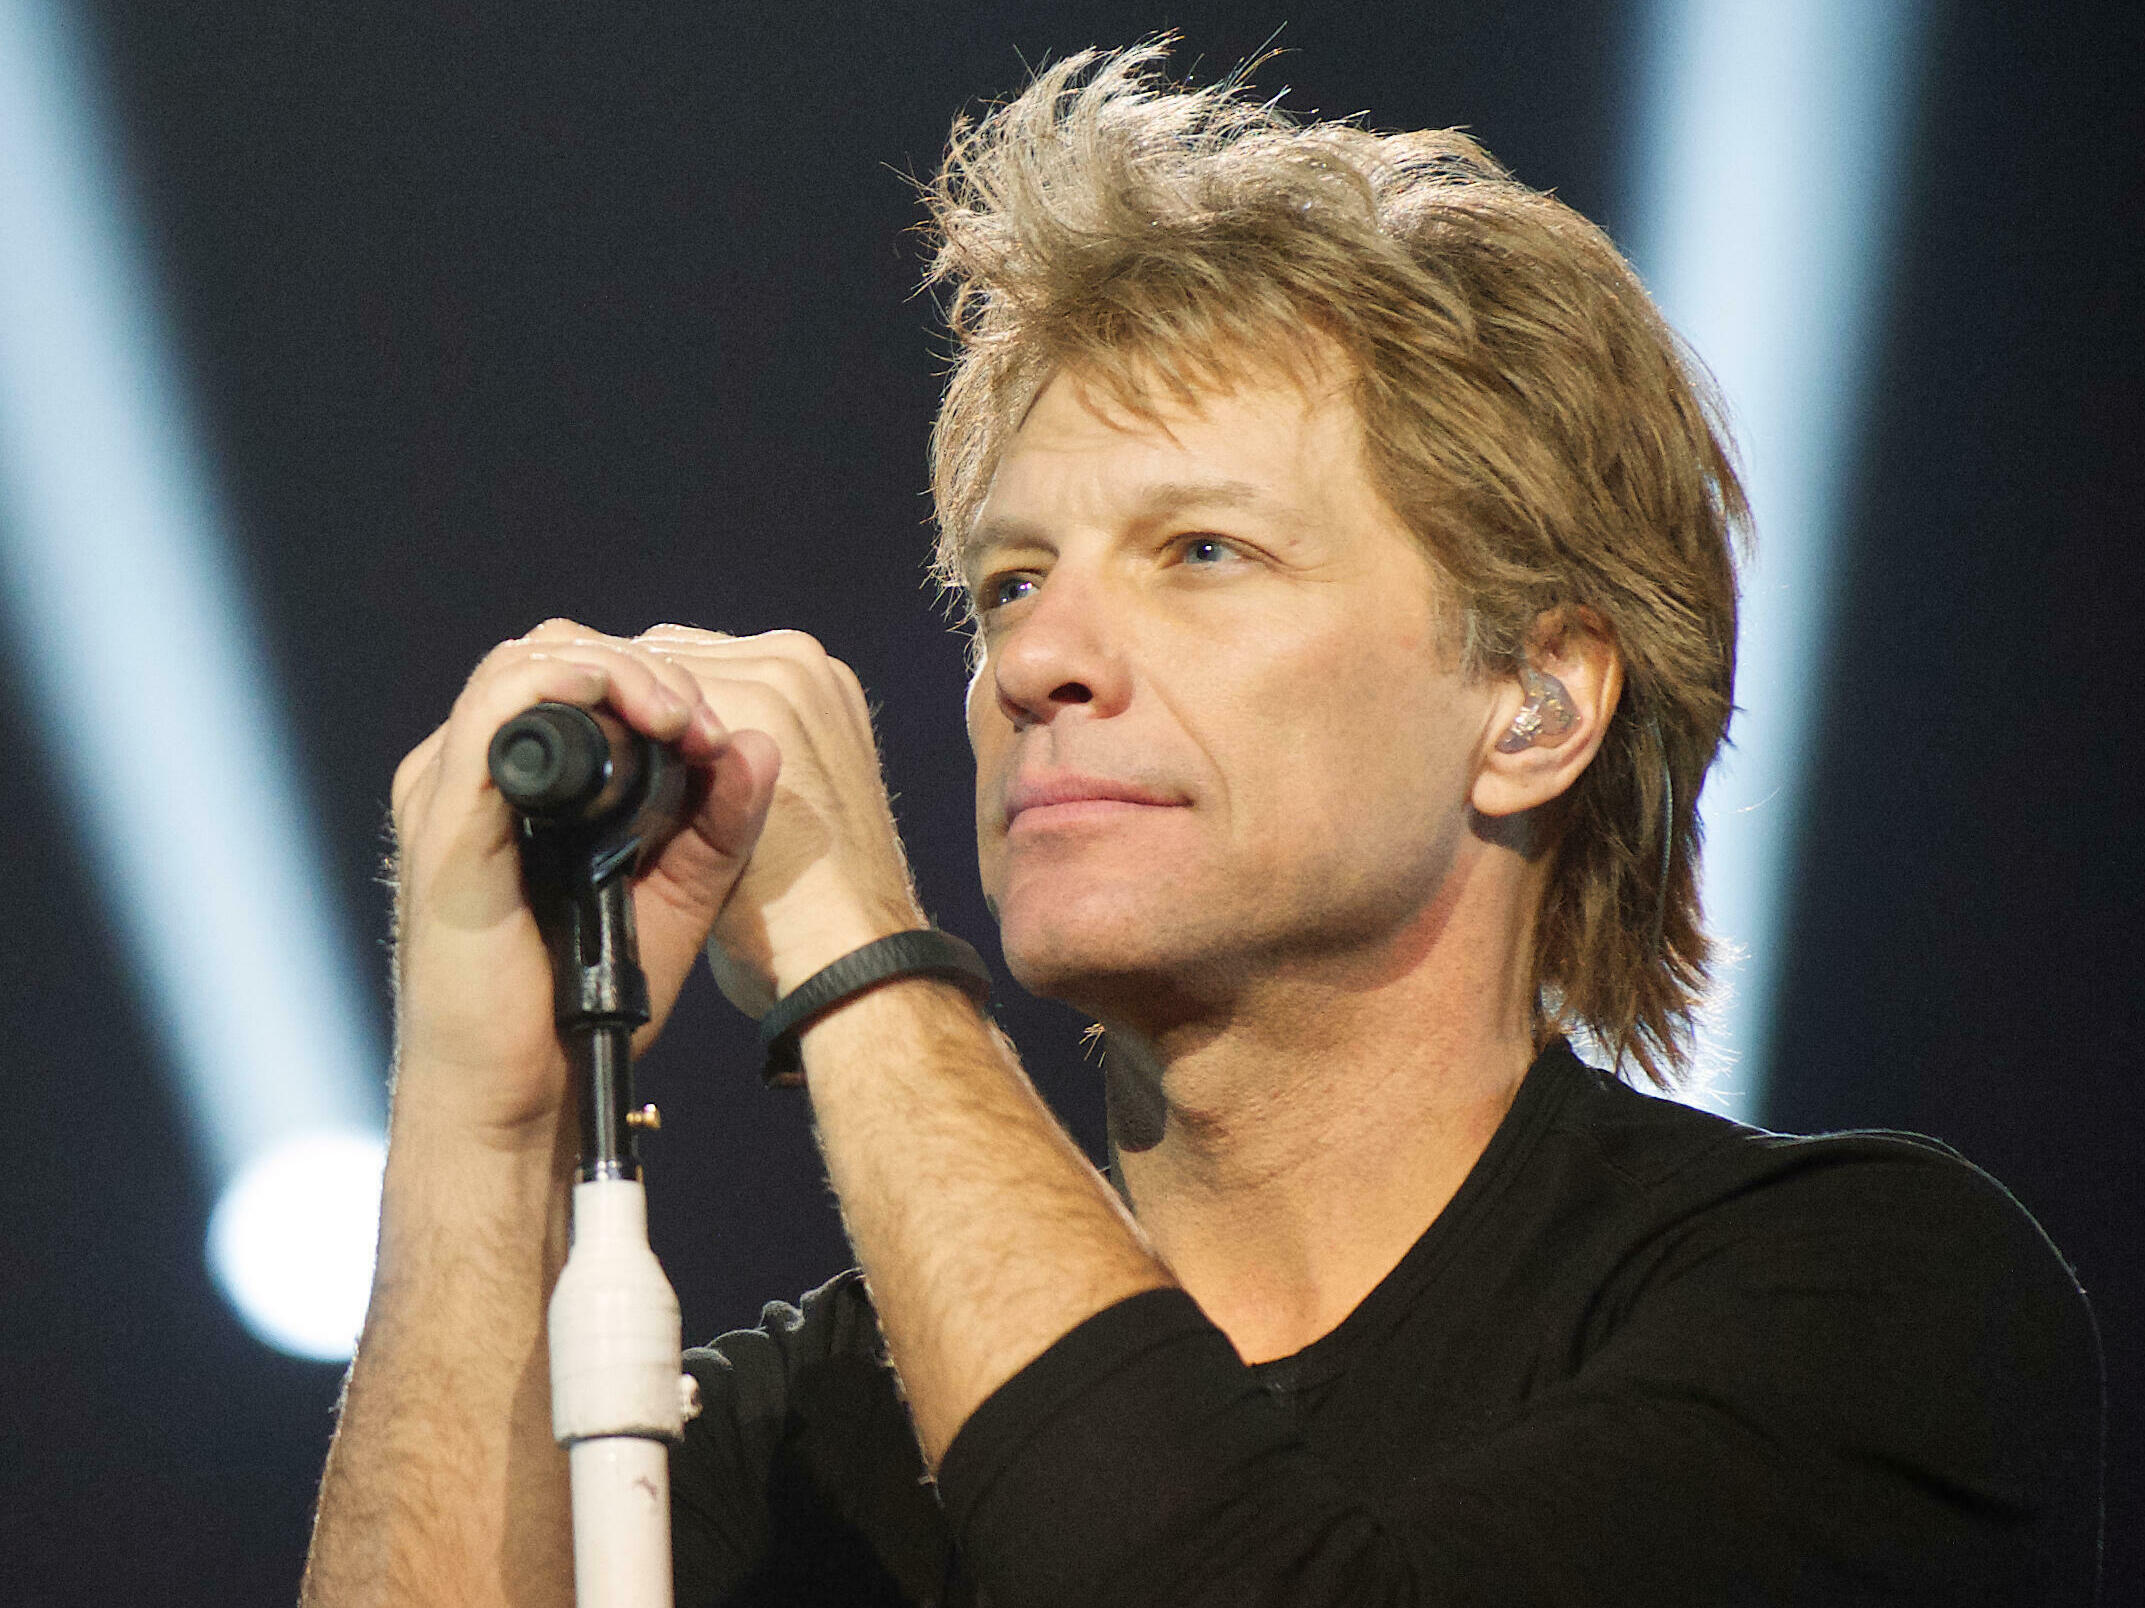 Jon Bon Jovi at the Mohegan Sun in Uncasville, Conn., in 2013.